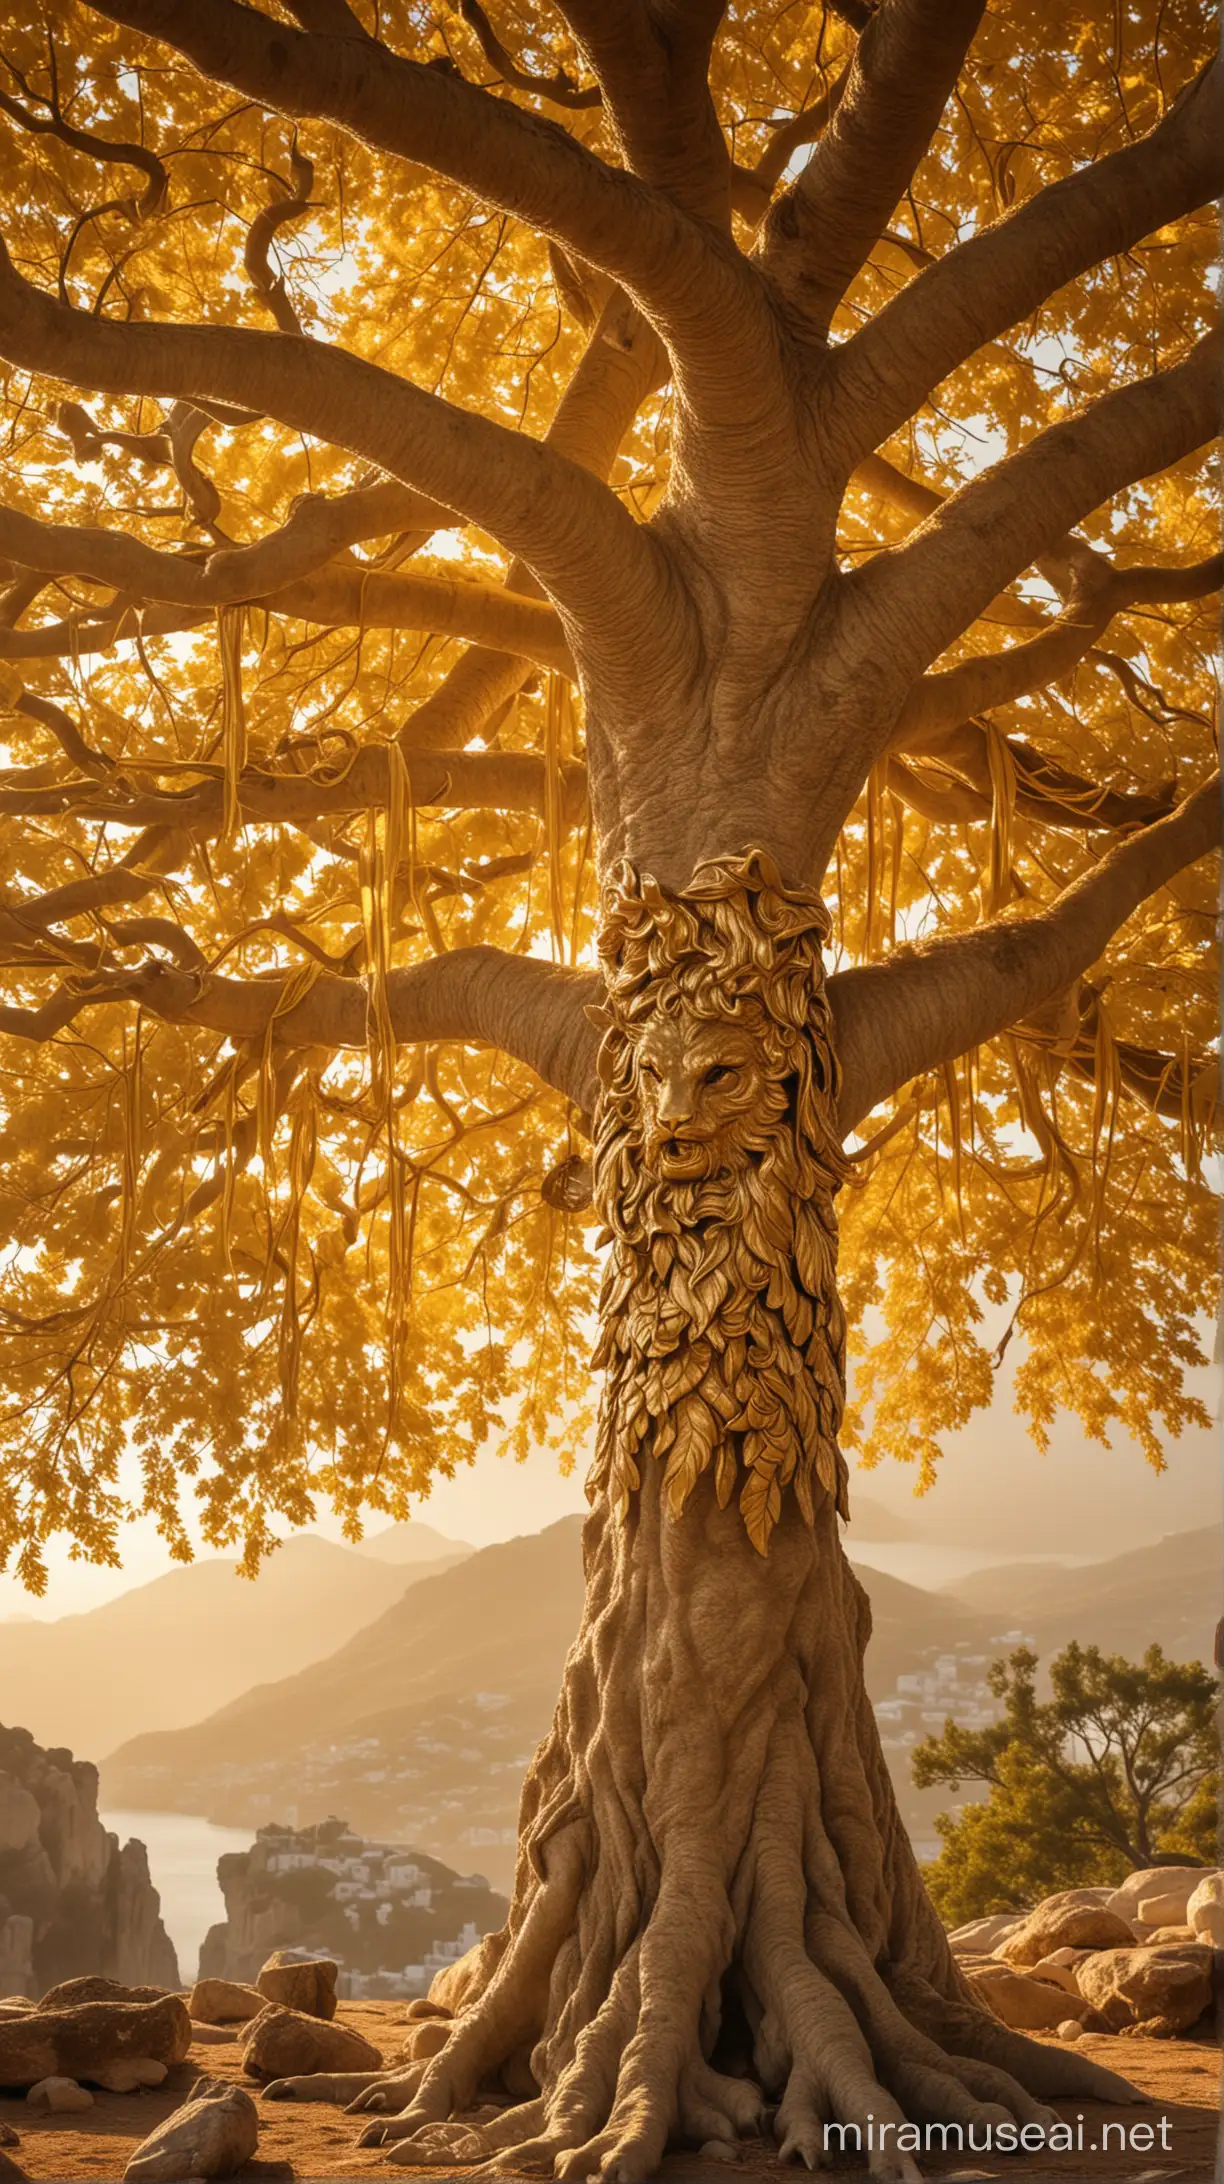 The Golden Fleece Hanging from the Sacred Tree Greek Mythological Scene